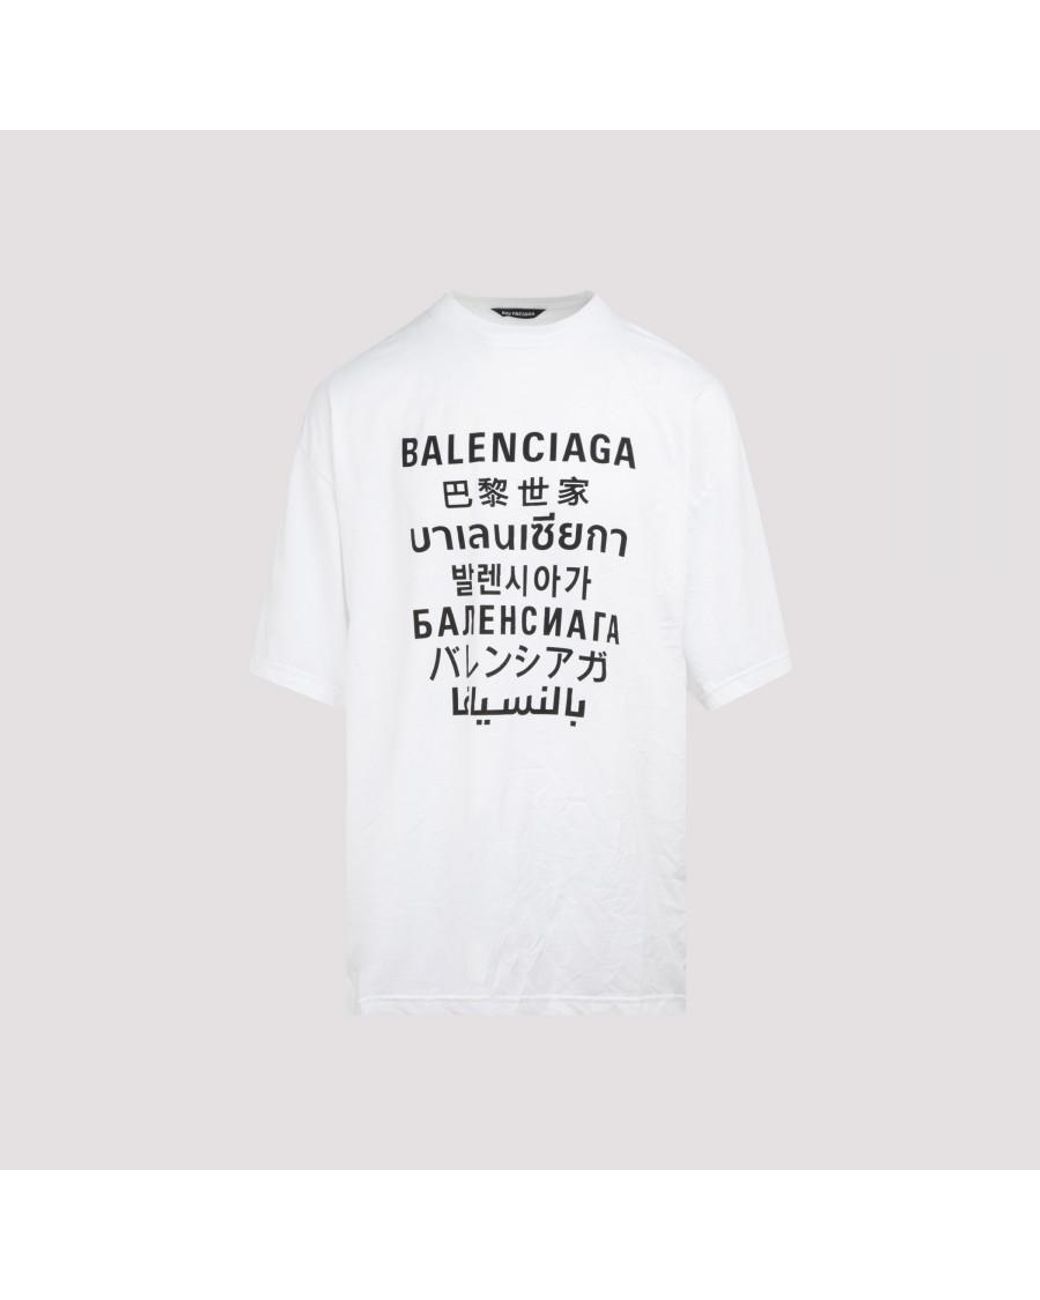 Chi tiết hơn 69 về balenciaga languages t shirt hay nhất  cdgdbentreeduvn